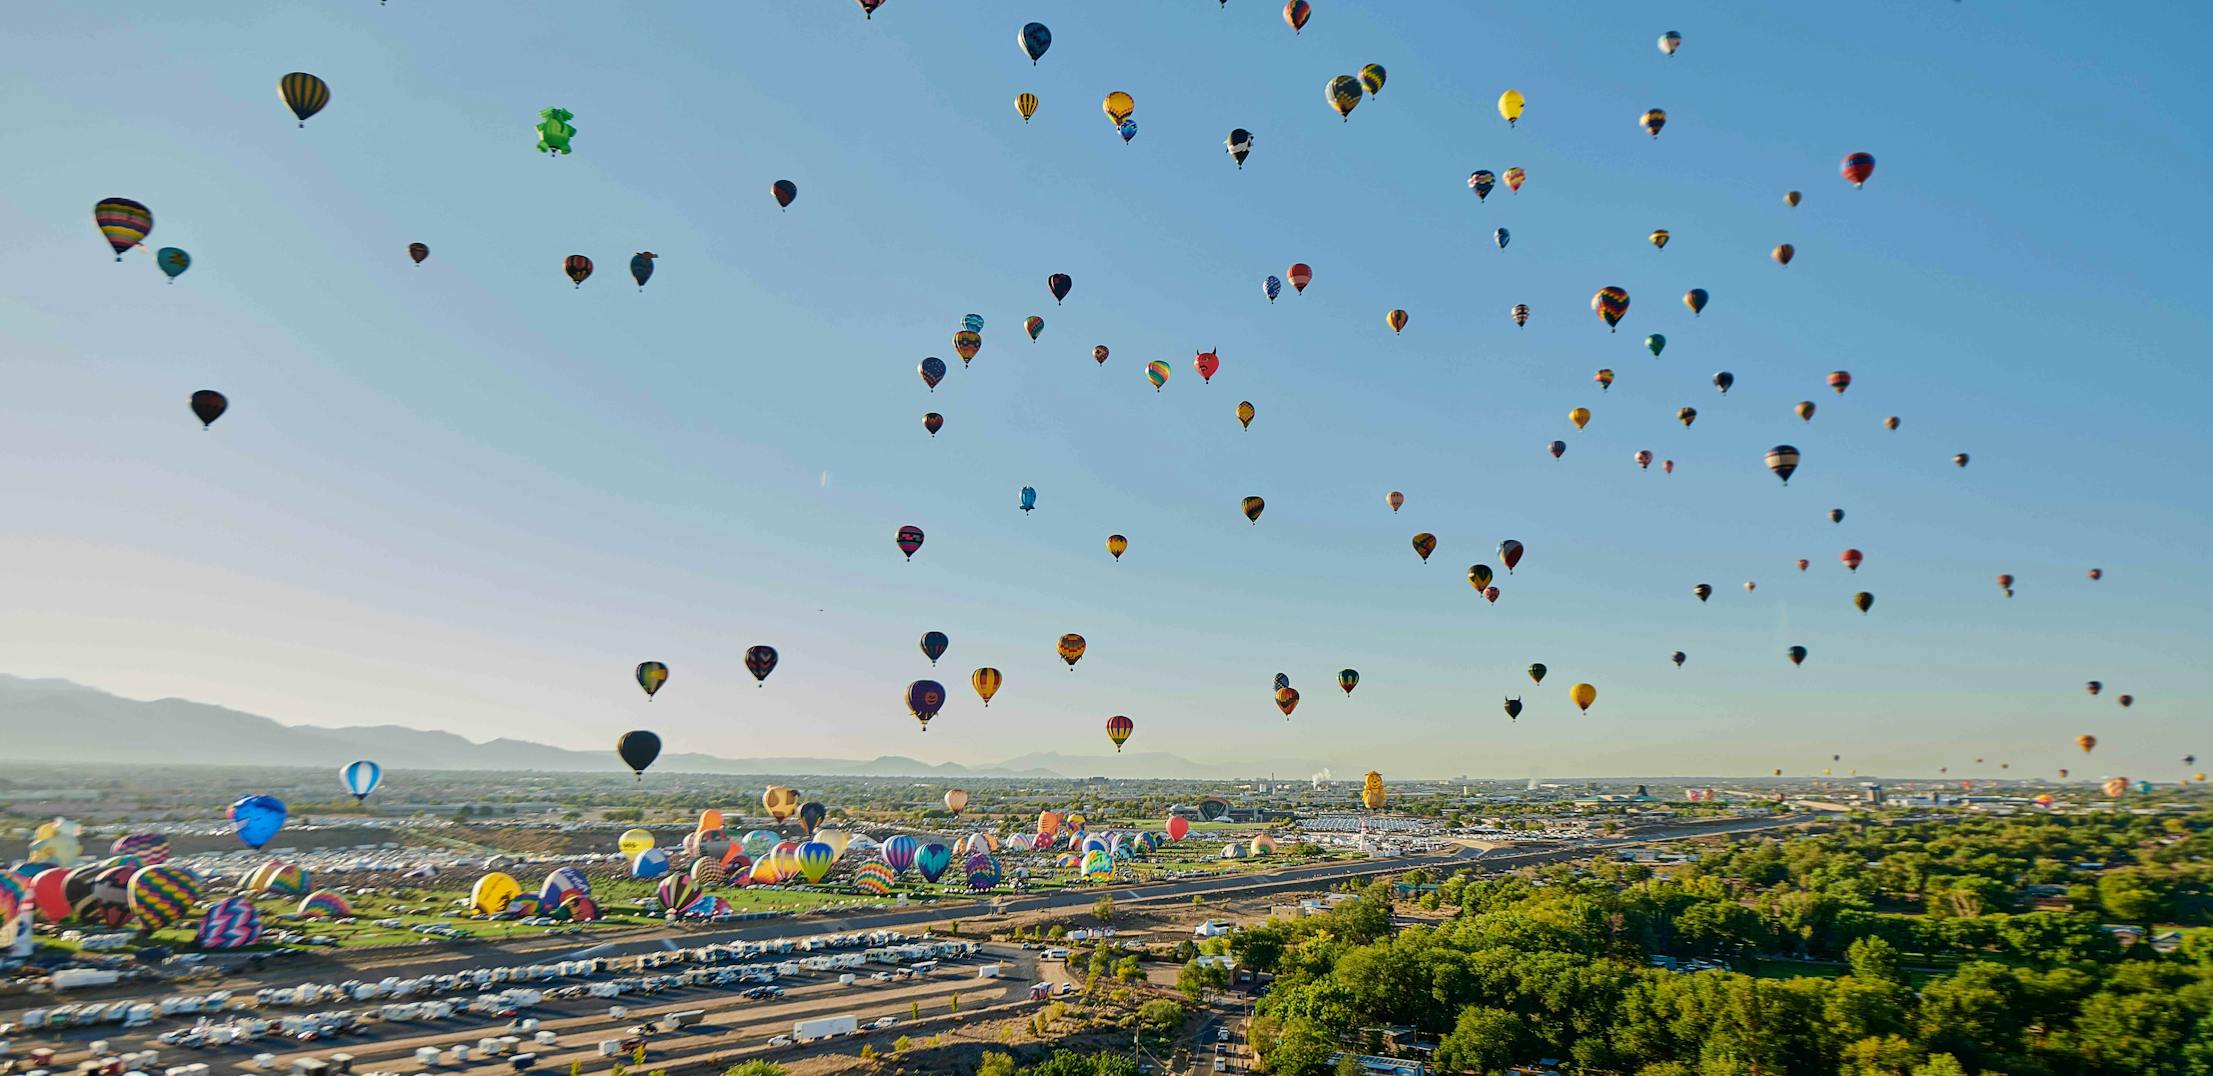 A sky full of hot air balloons in Albuquerque, New Mexico